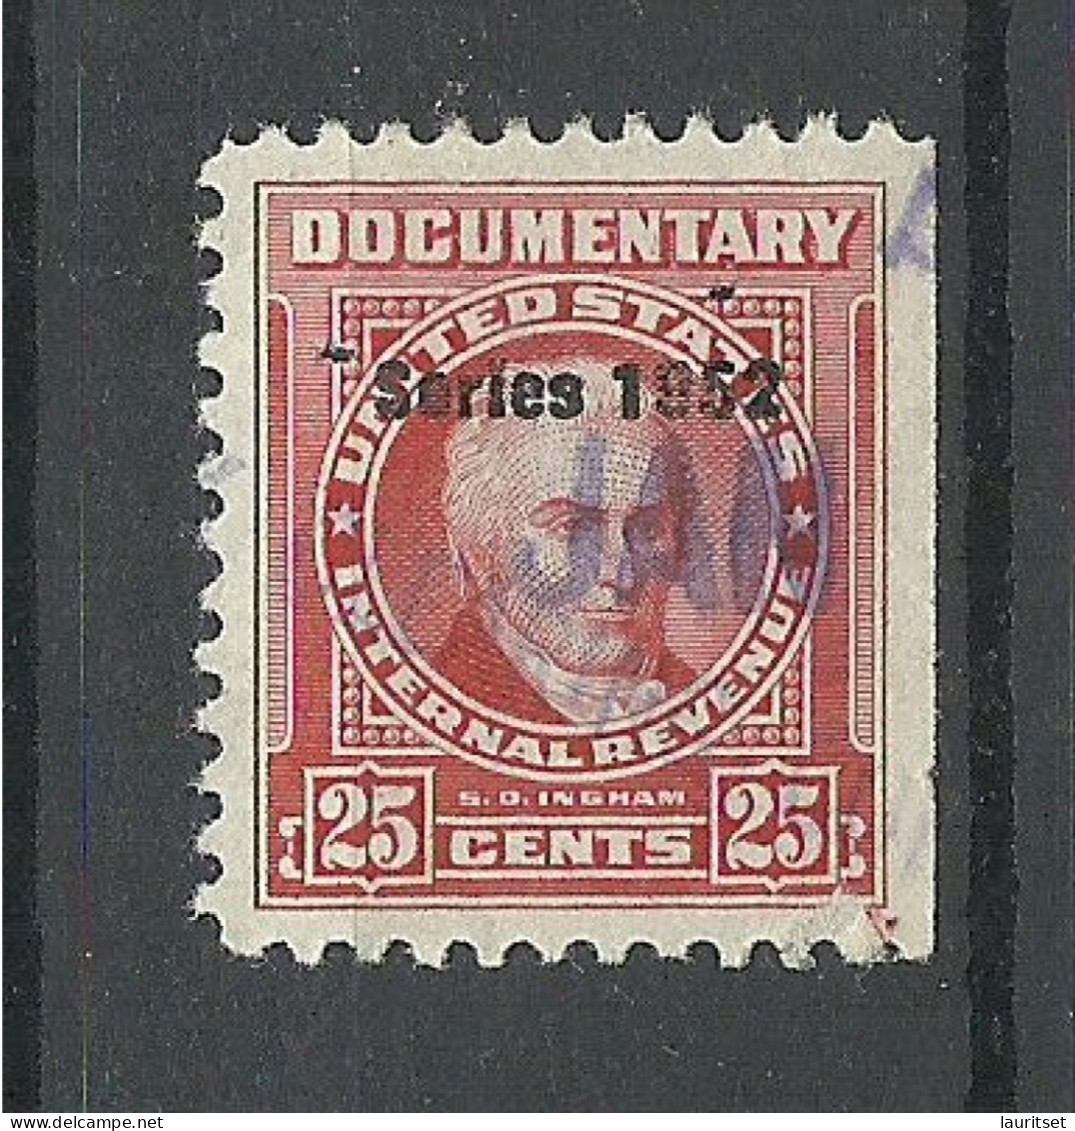 USA Documentary Tax Int. Revenue Taxe Series 1952 Ingham, O - Fiscaux